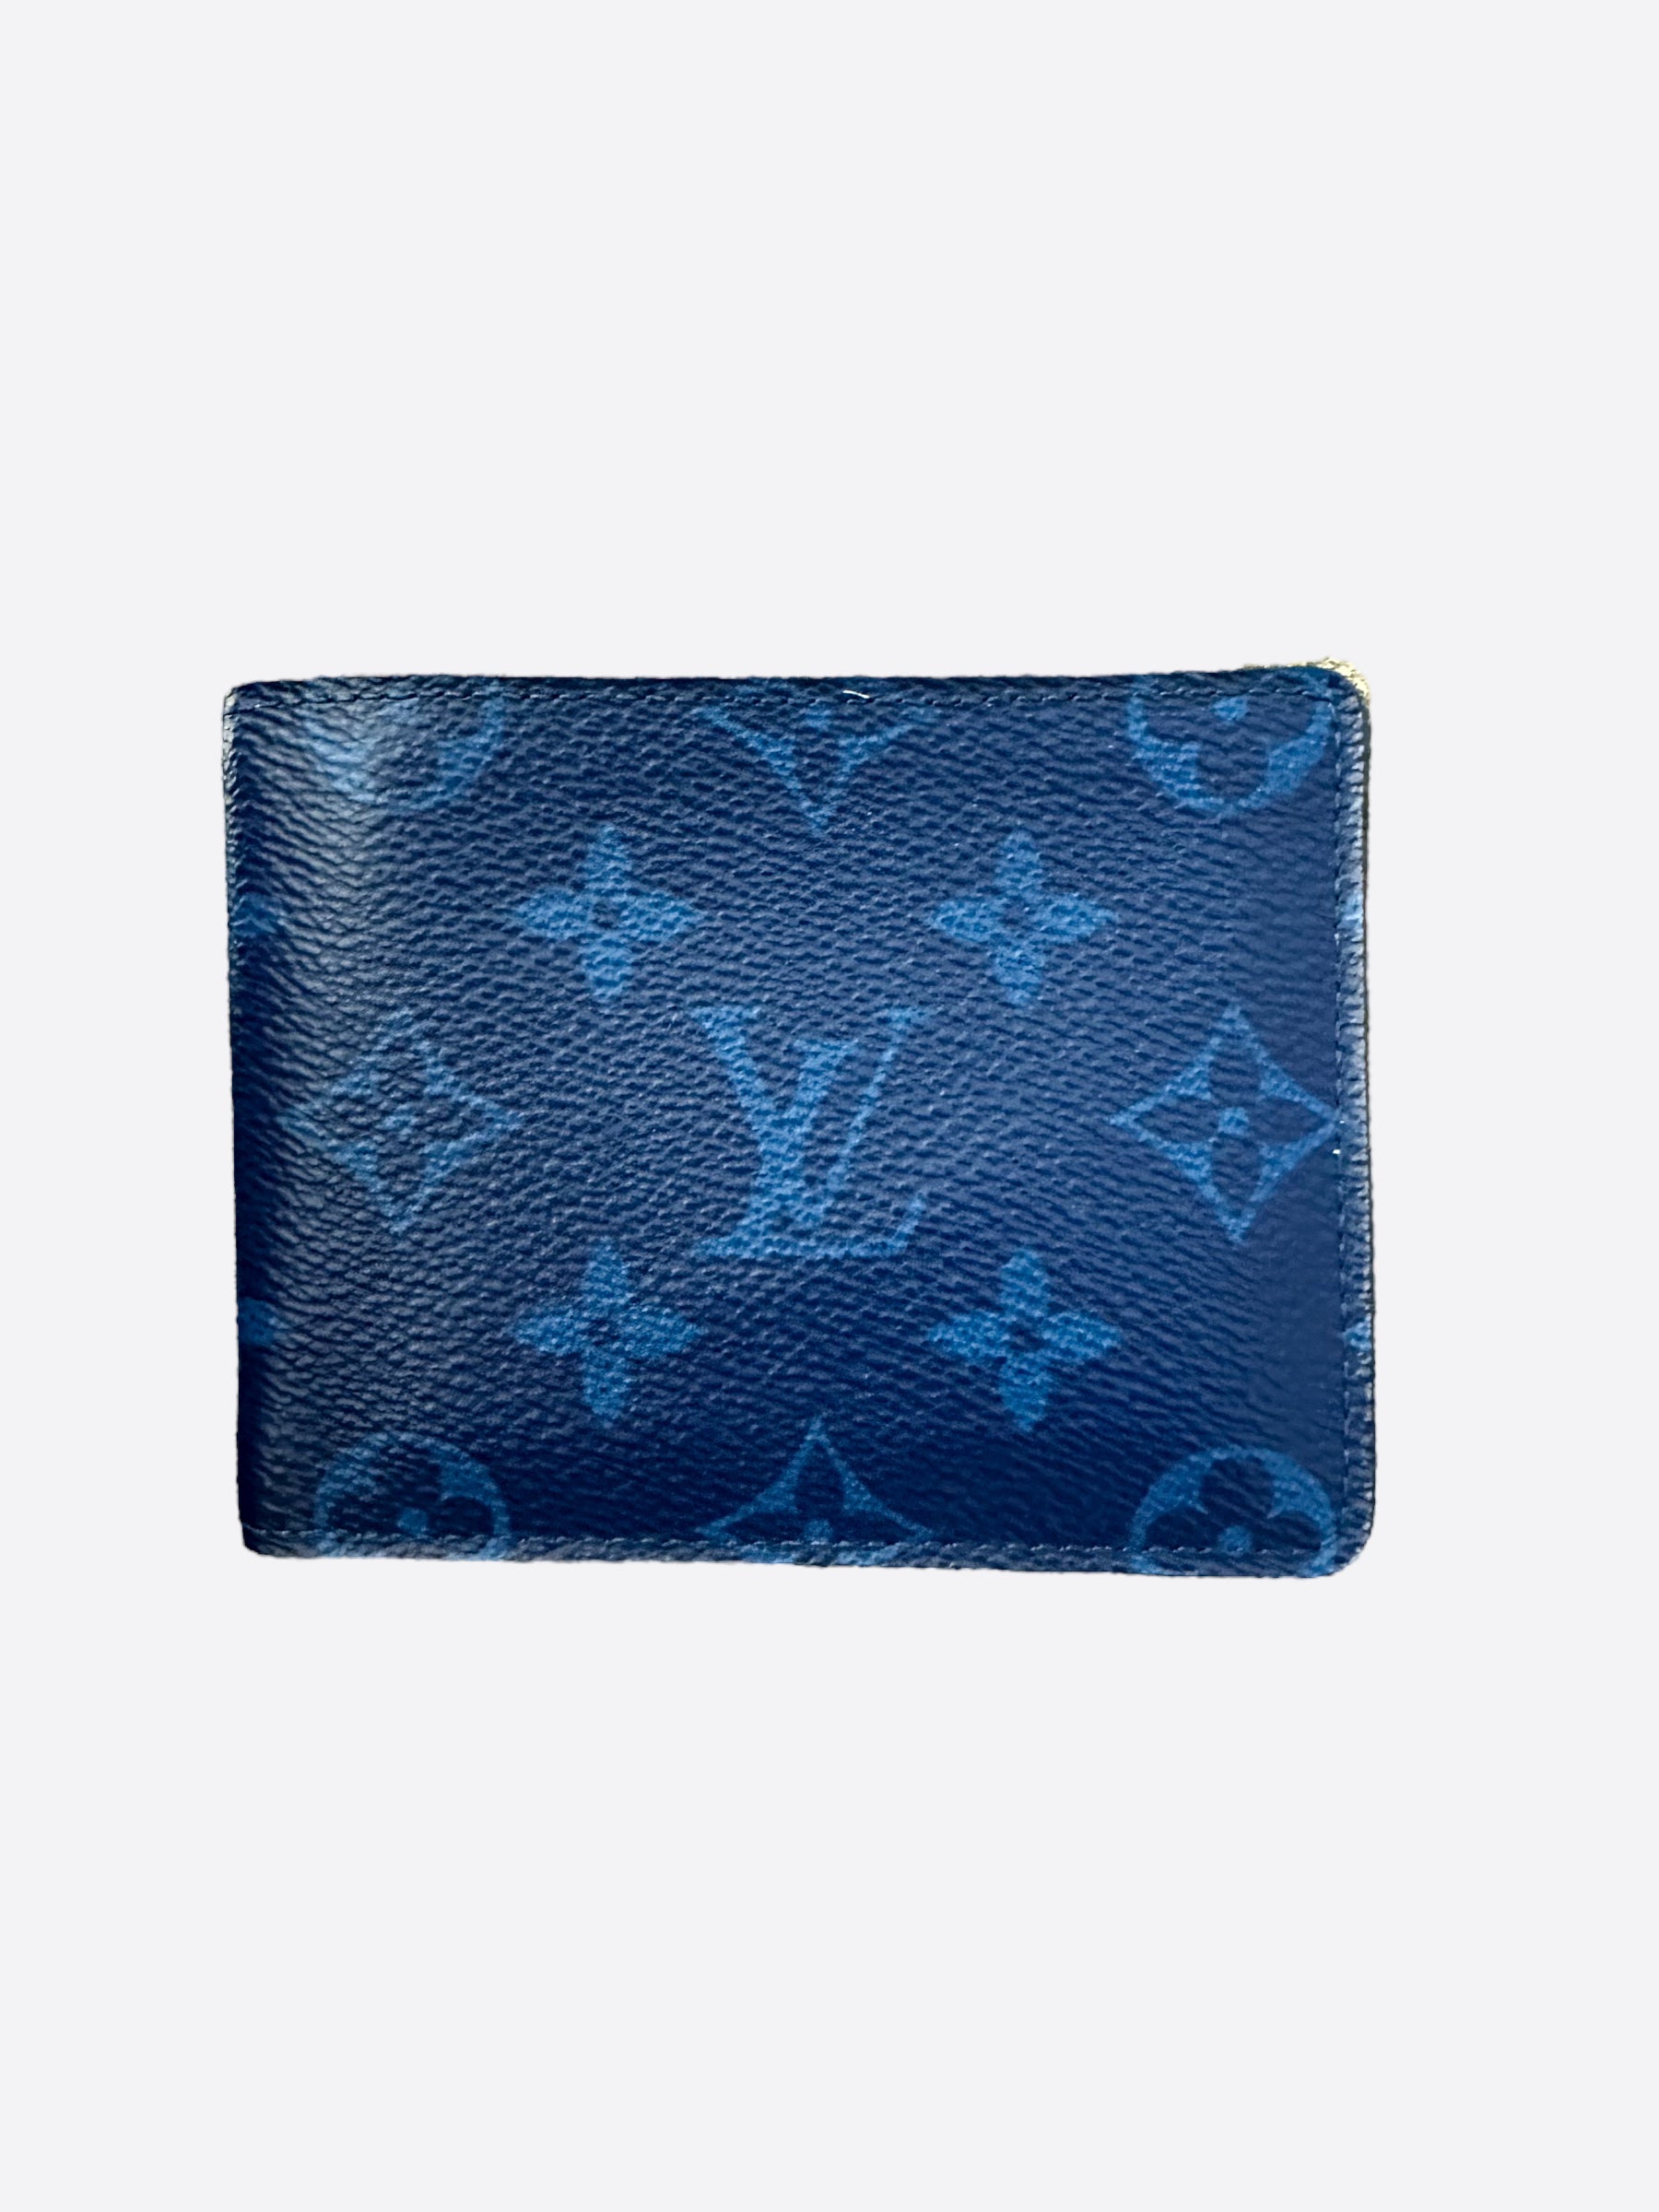 lv wallet blue